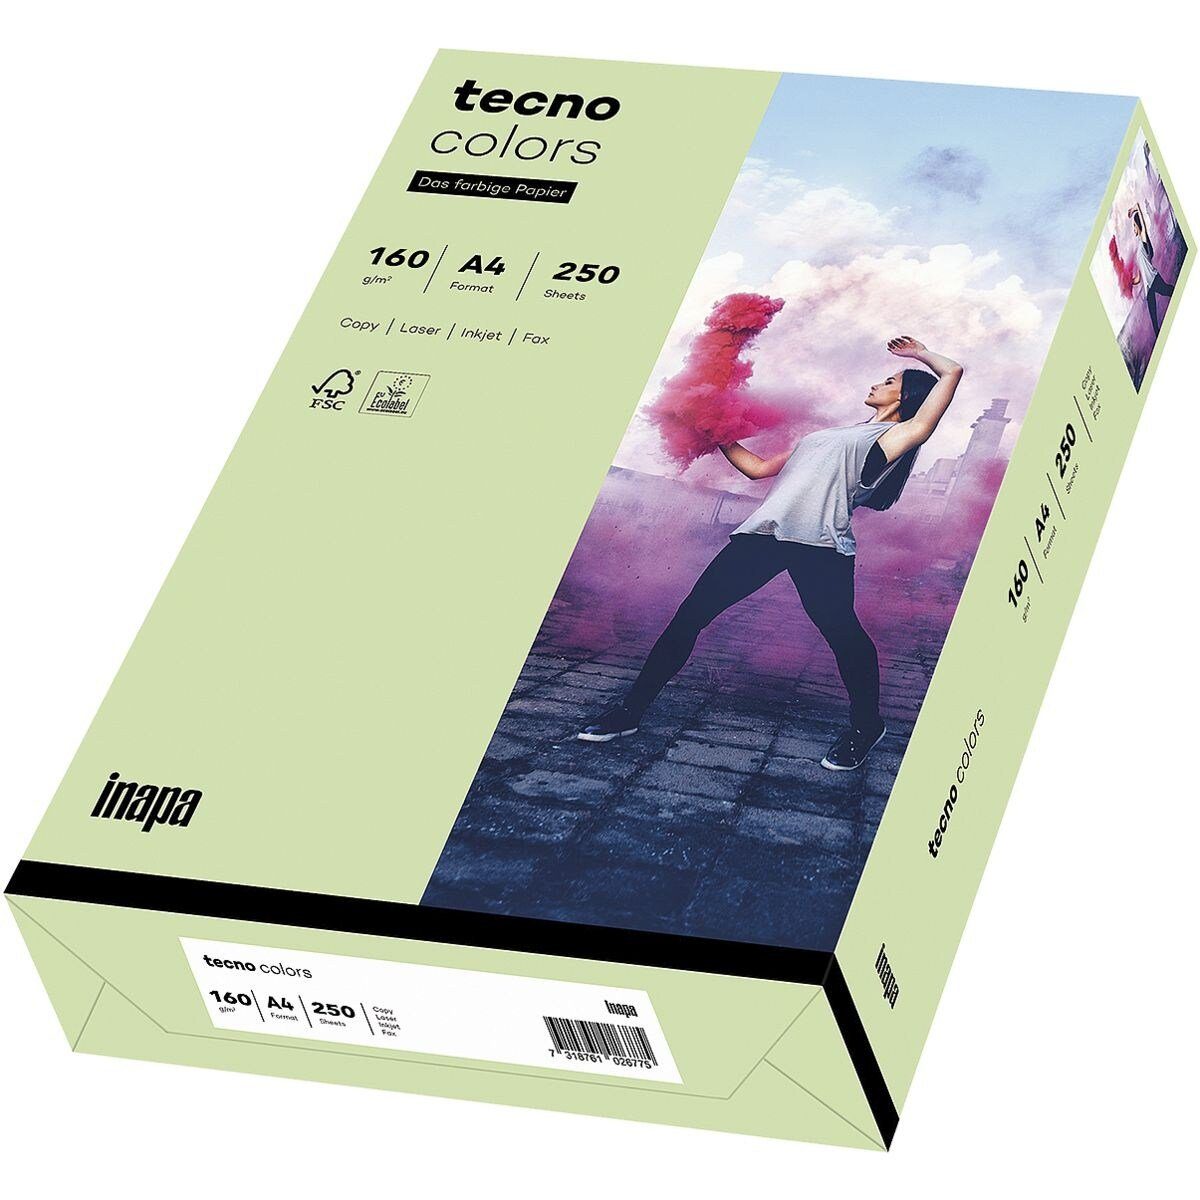 Inapa tecno Drucker- und Kopierpapier Rainbow / tecno Colors, Pastellfarben, Format DIN A4, 160 g/m², 250 Blatt mittelgrün